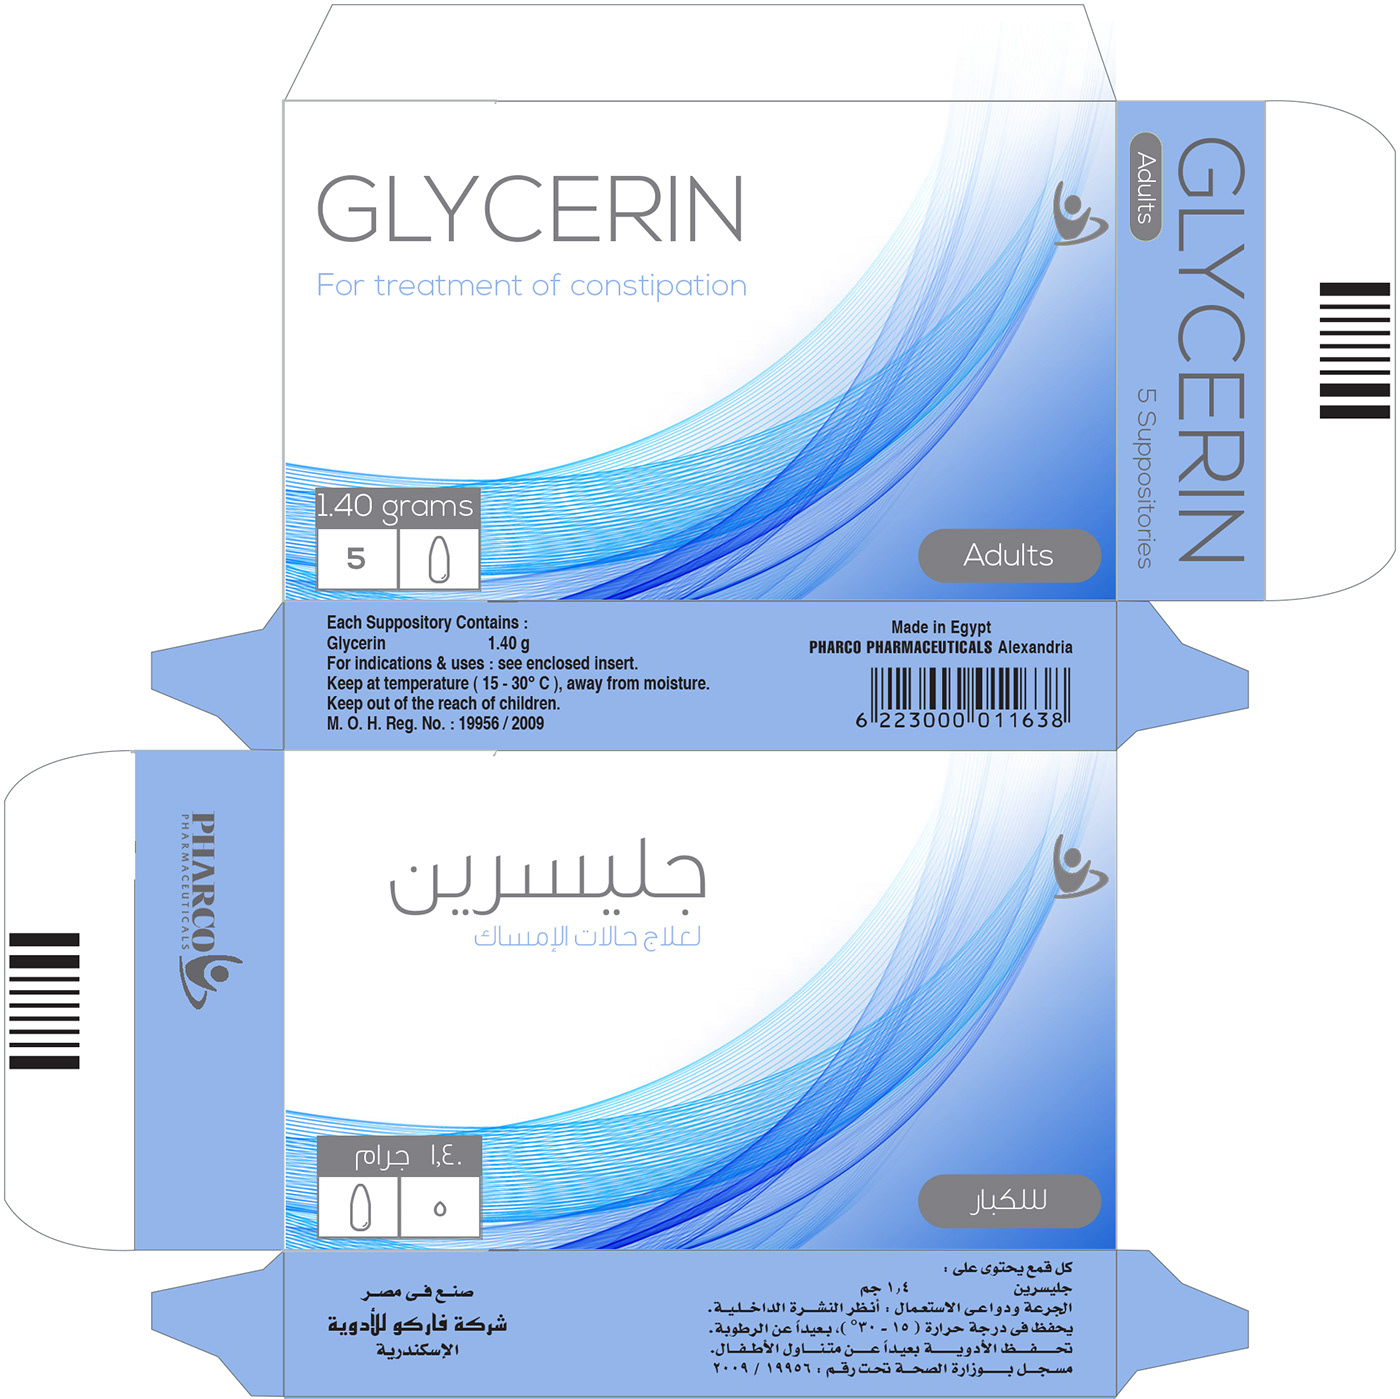 Adult design glycerin infants Medecine packing Pharco Printing suppositories